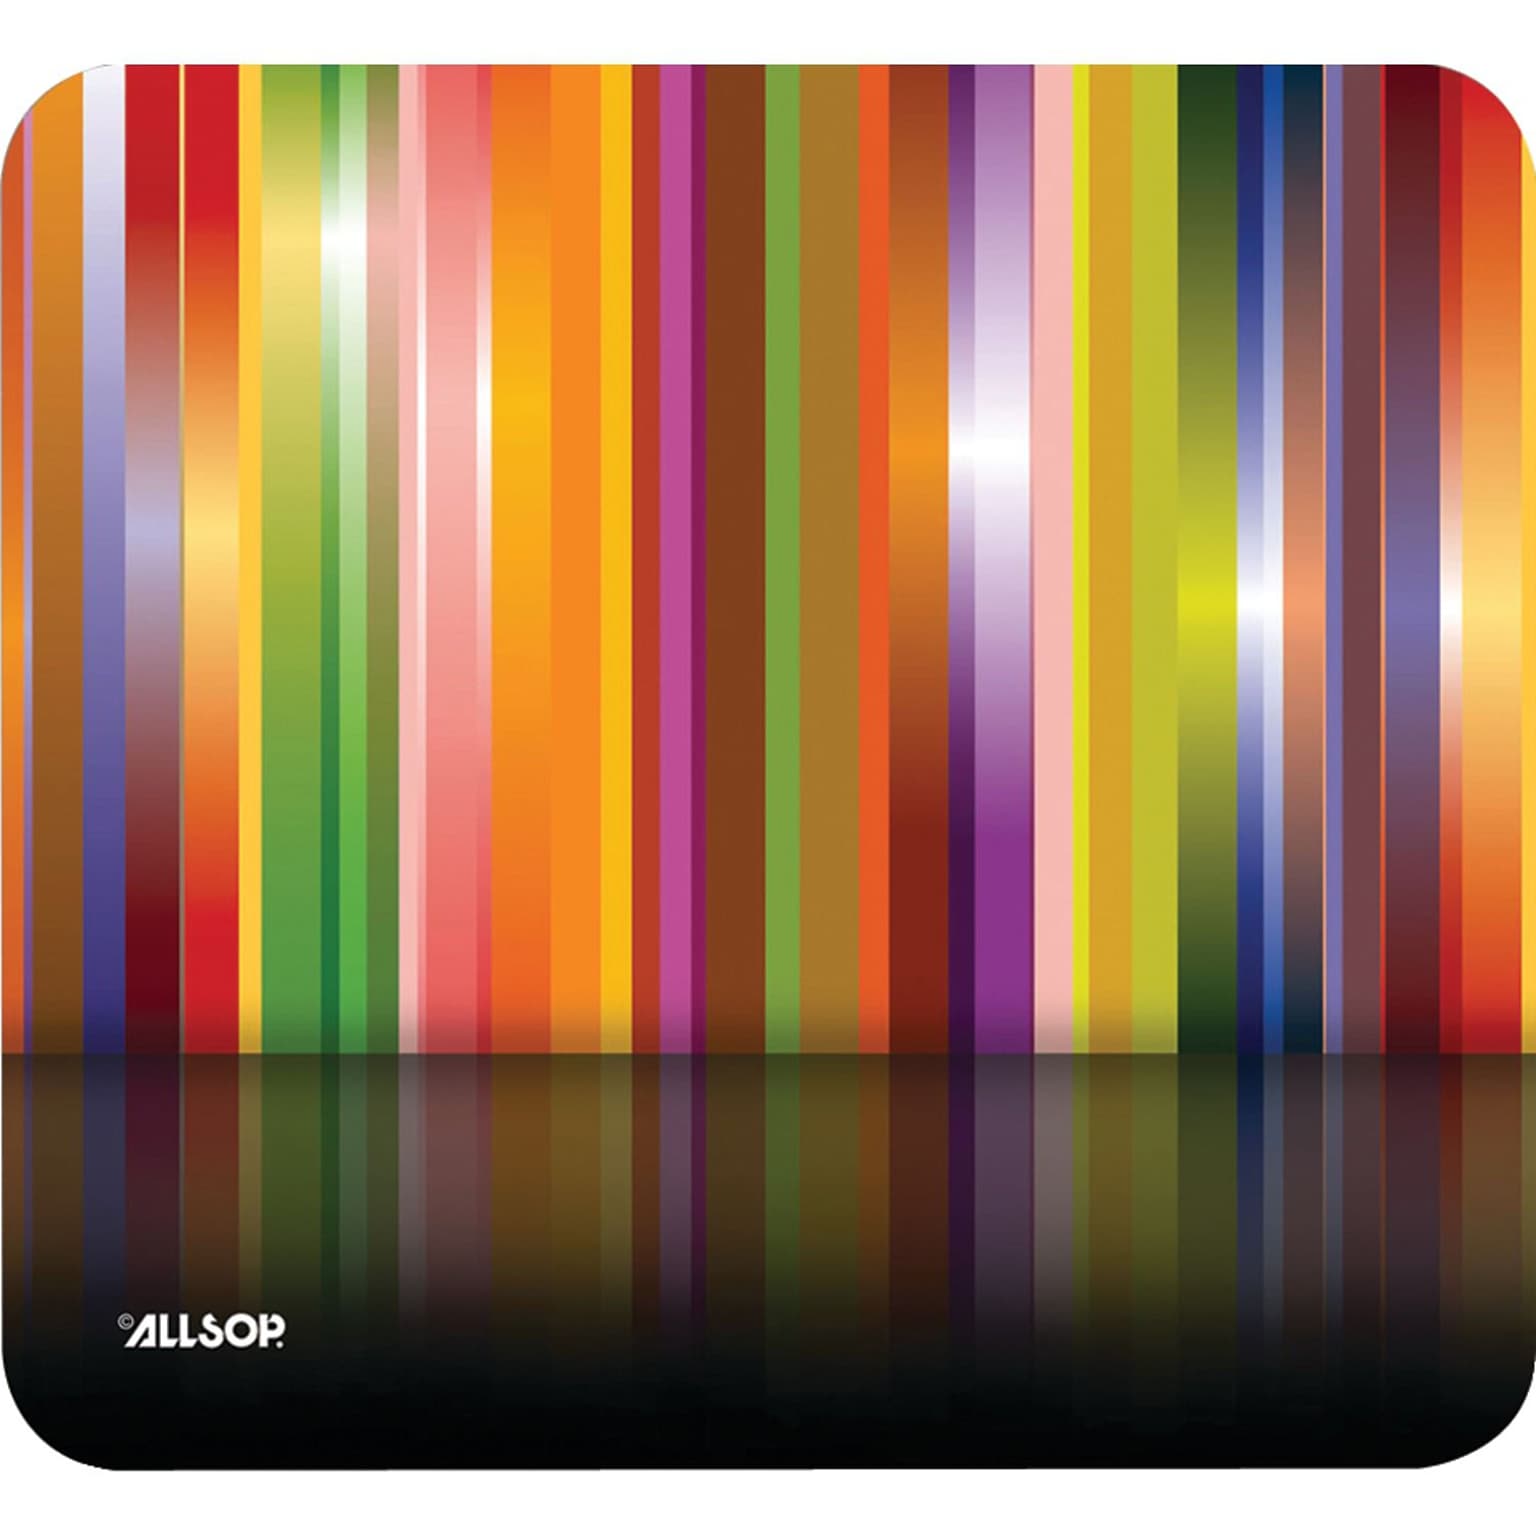 Allsop NaturesmartPad Mouse Pad, Multi Stripes (30599)